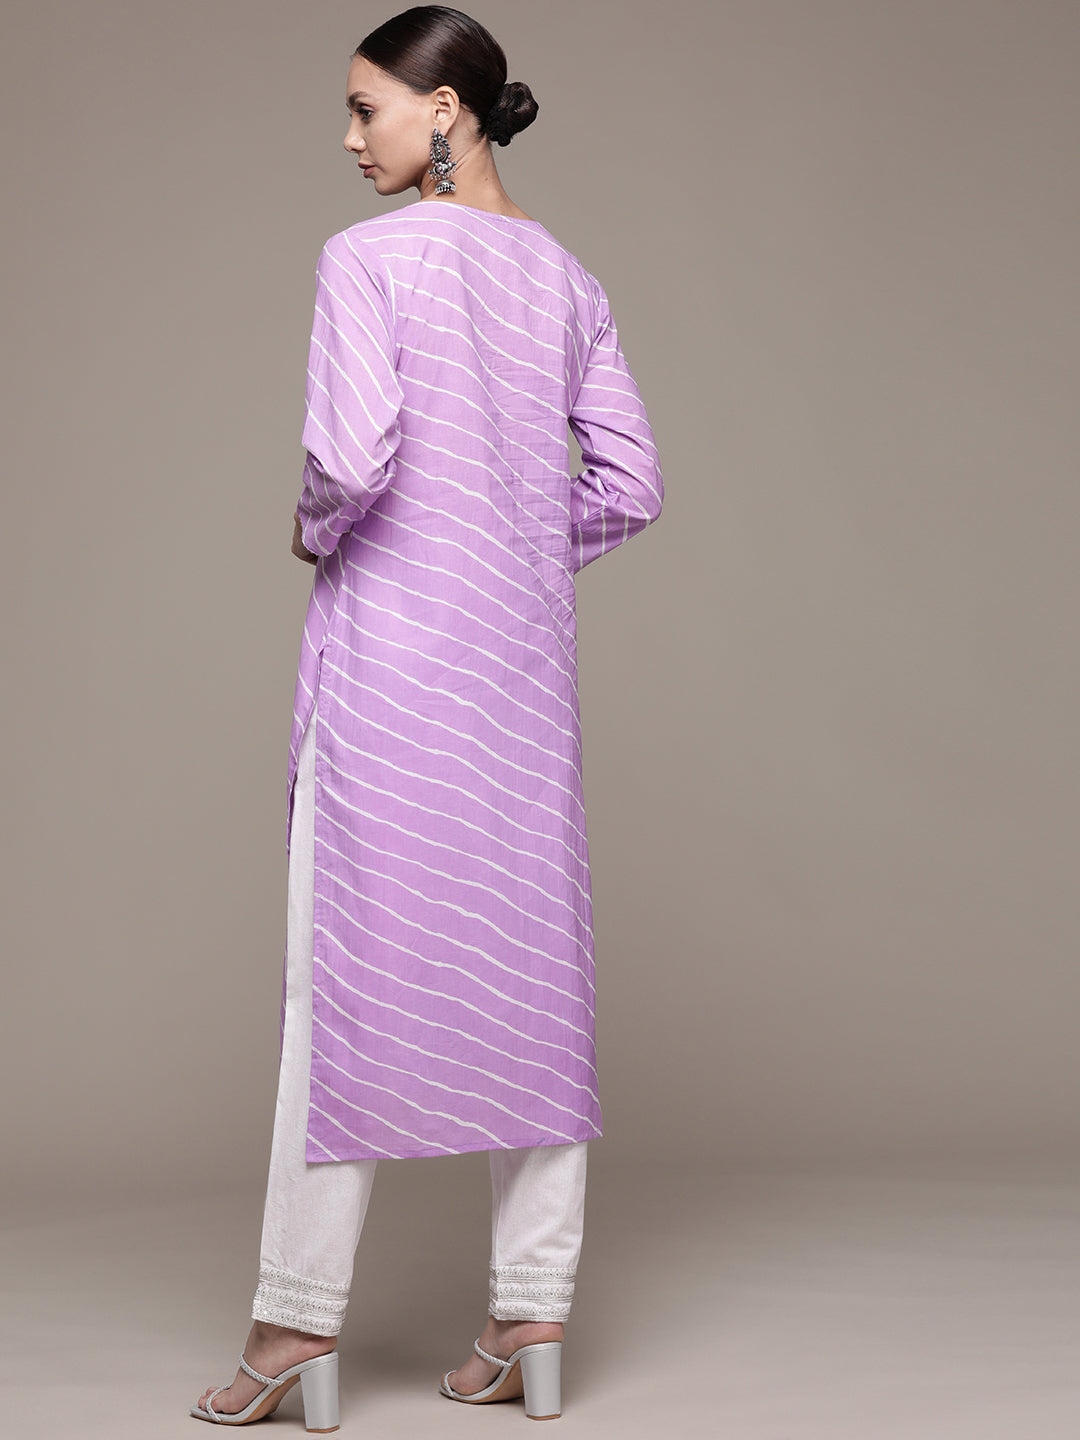 Ishin Women's Cotton Purple & Off White Embroidered A-Line Kurta Trouser Set